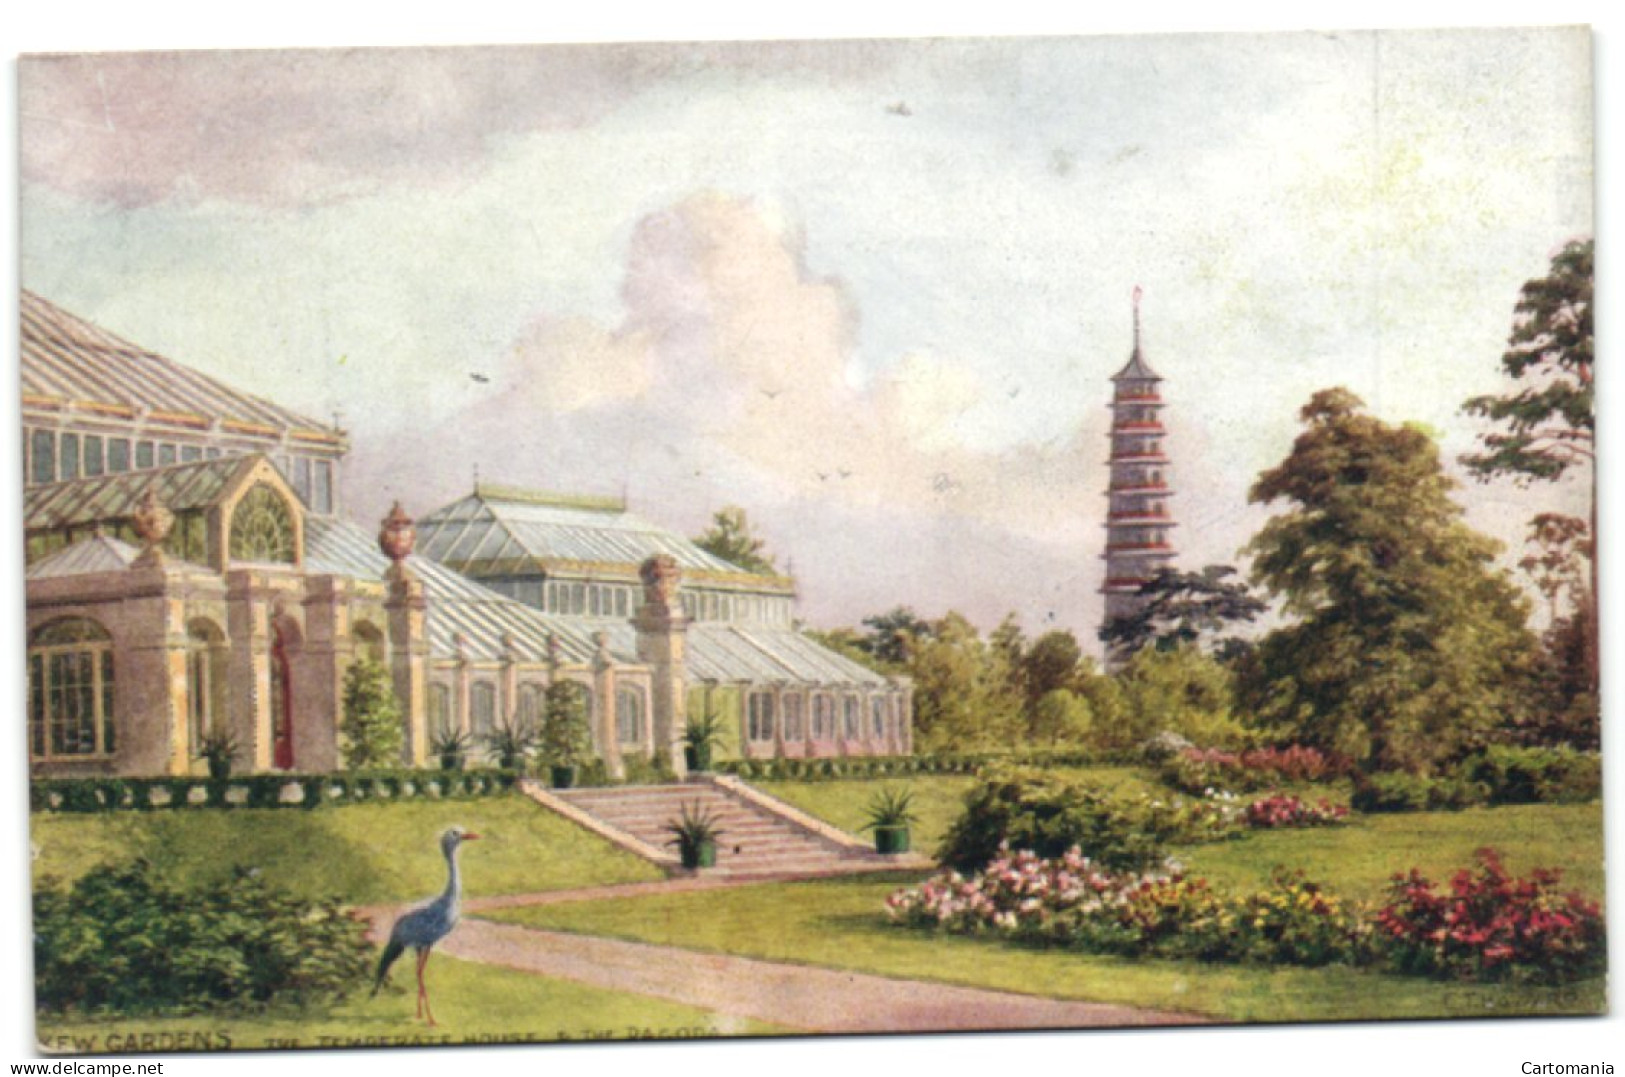 Kew Gardens - The Temperate House & The Pagoda - London Suburbs